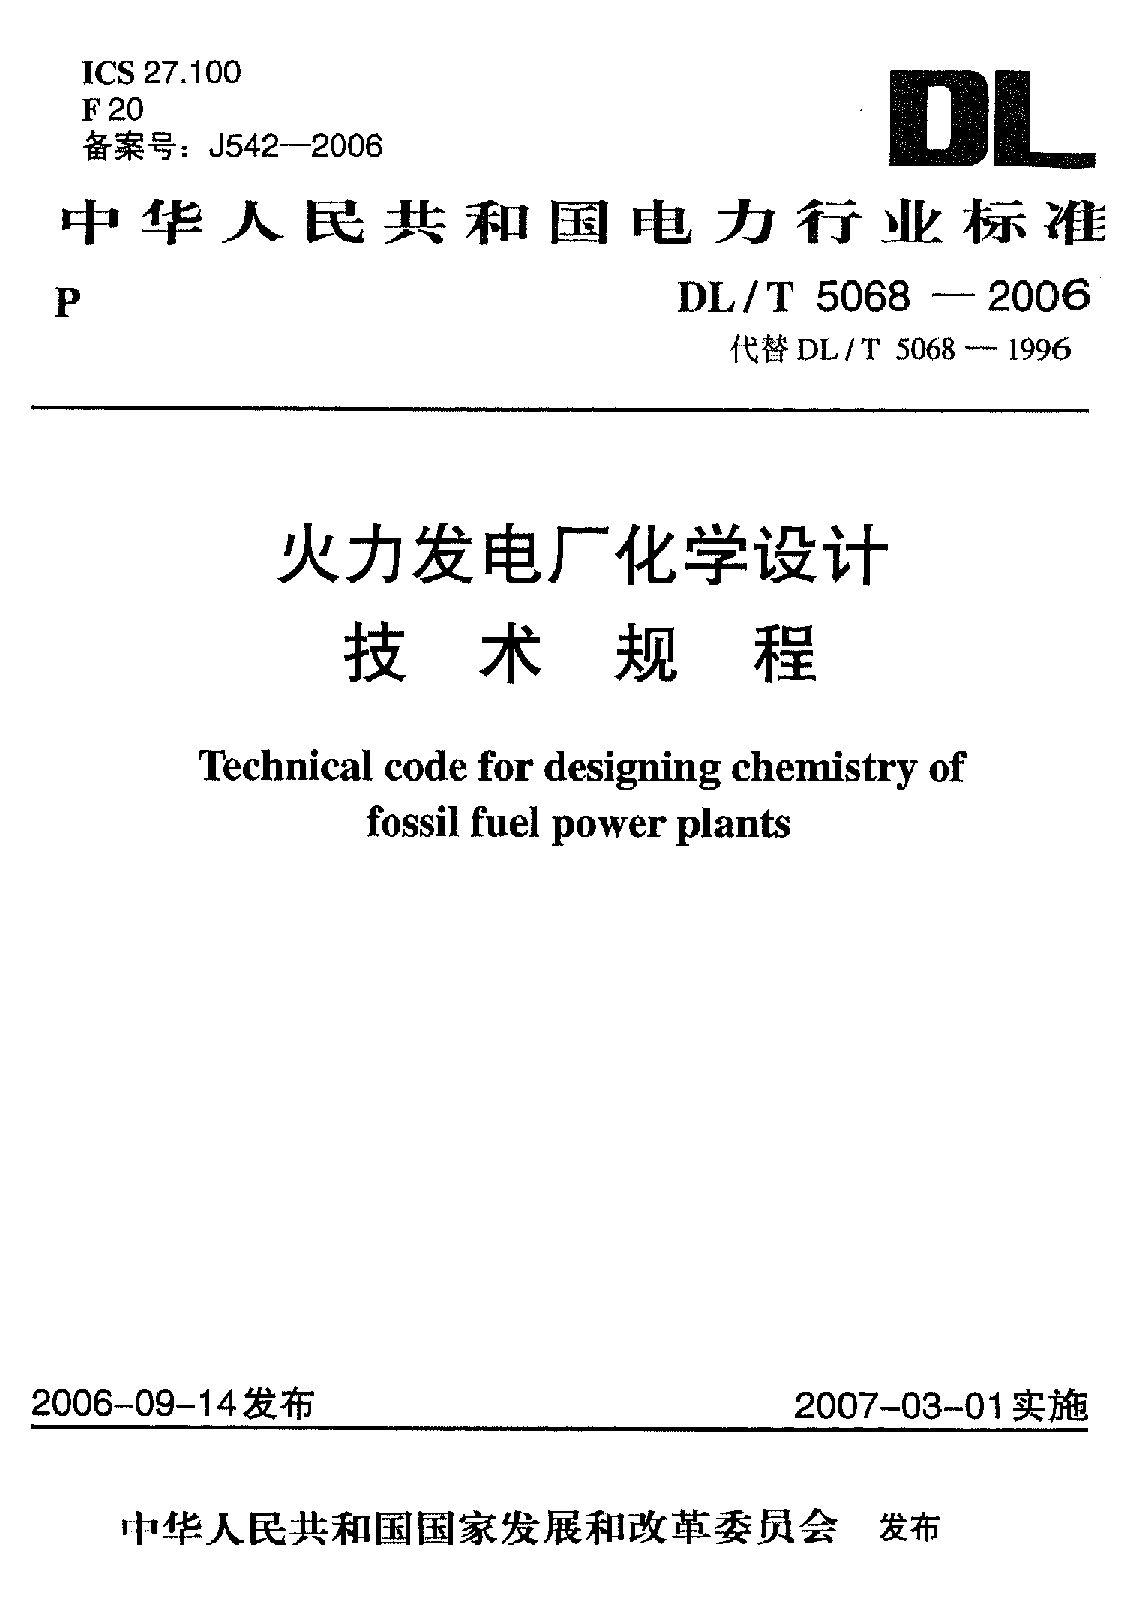 DL/T 5068-2006封面图